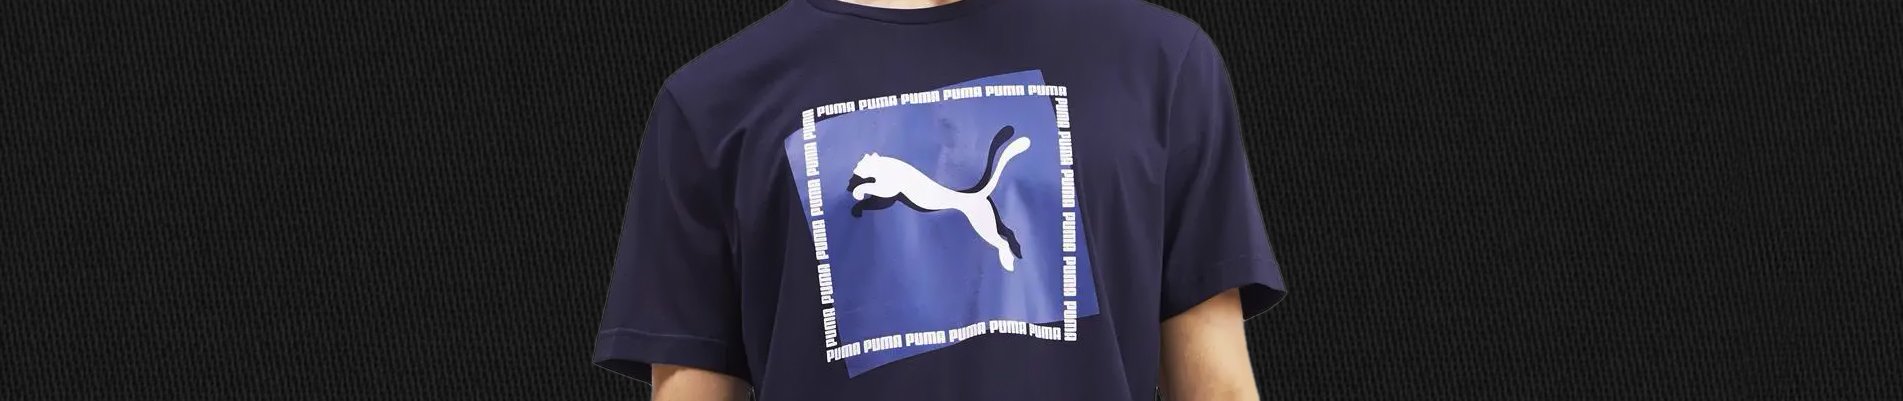 background-camiseta-puma